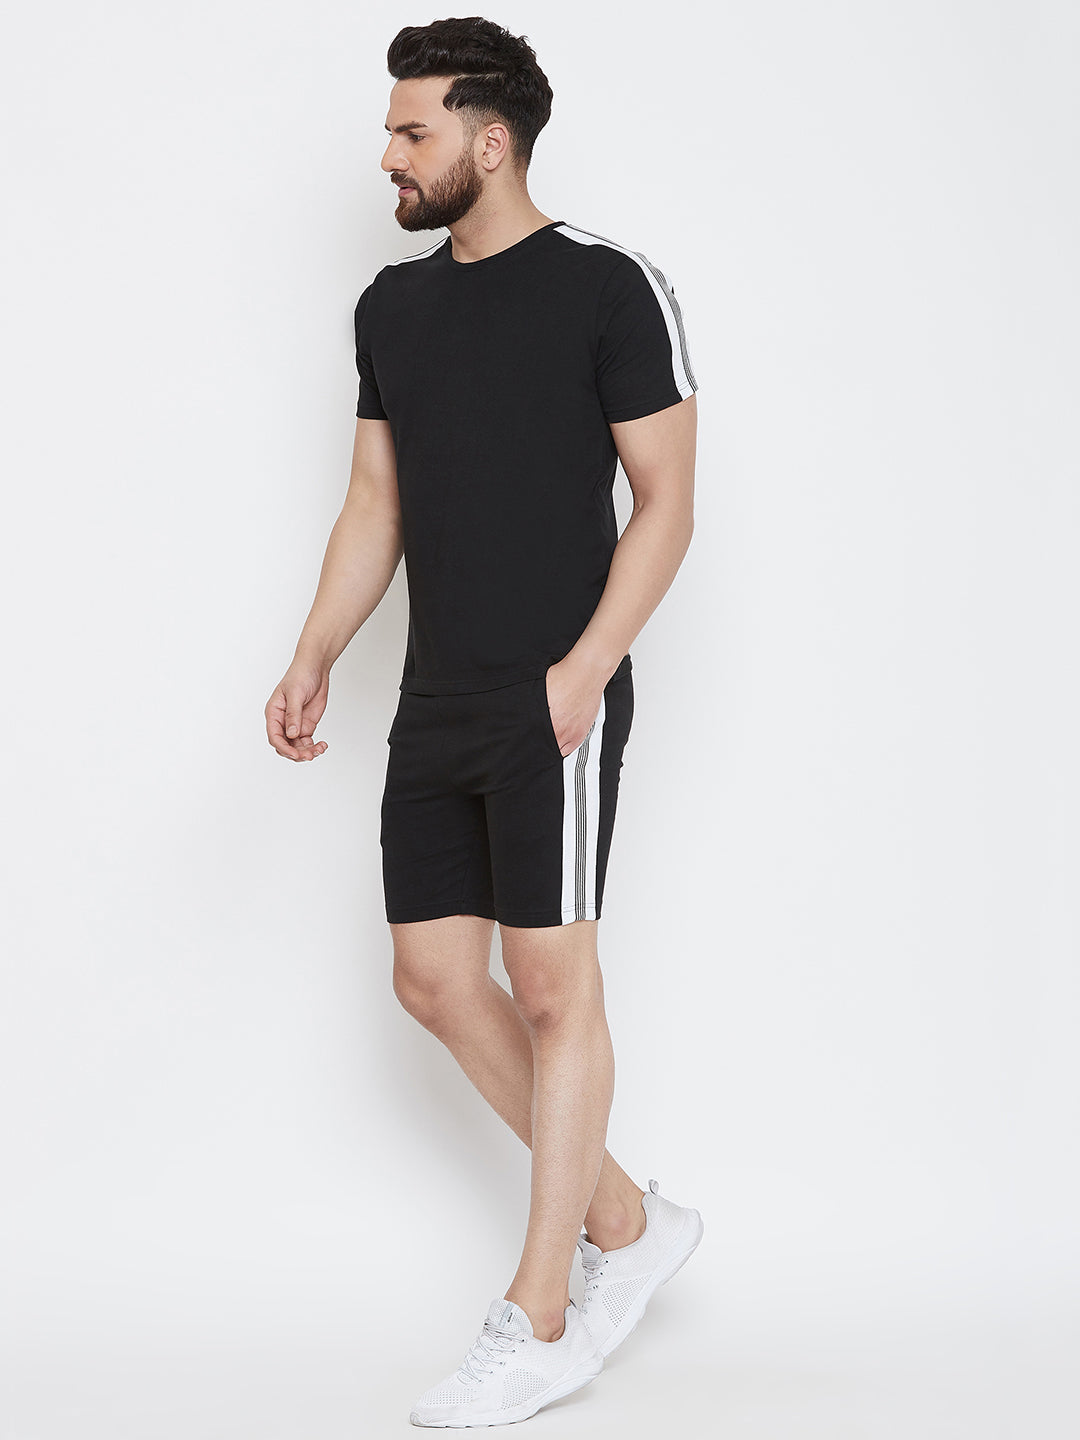 Black/White Half Sleeve Round Neck T-Shirt & Short Set